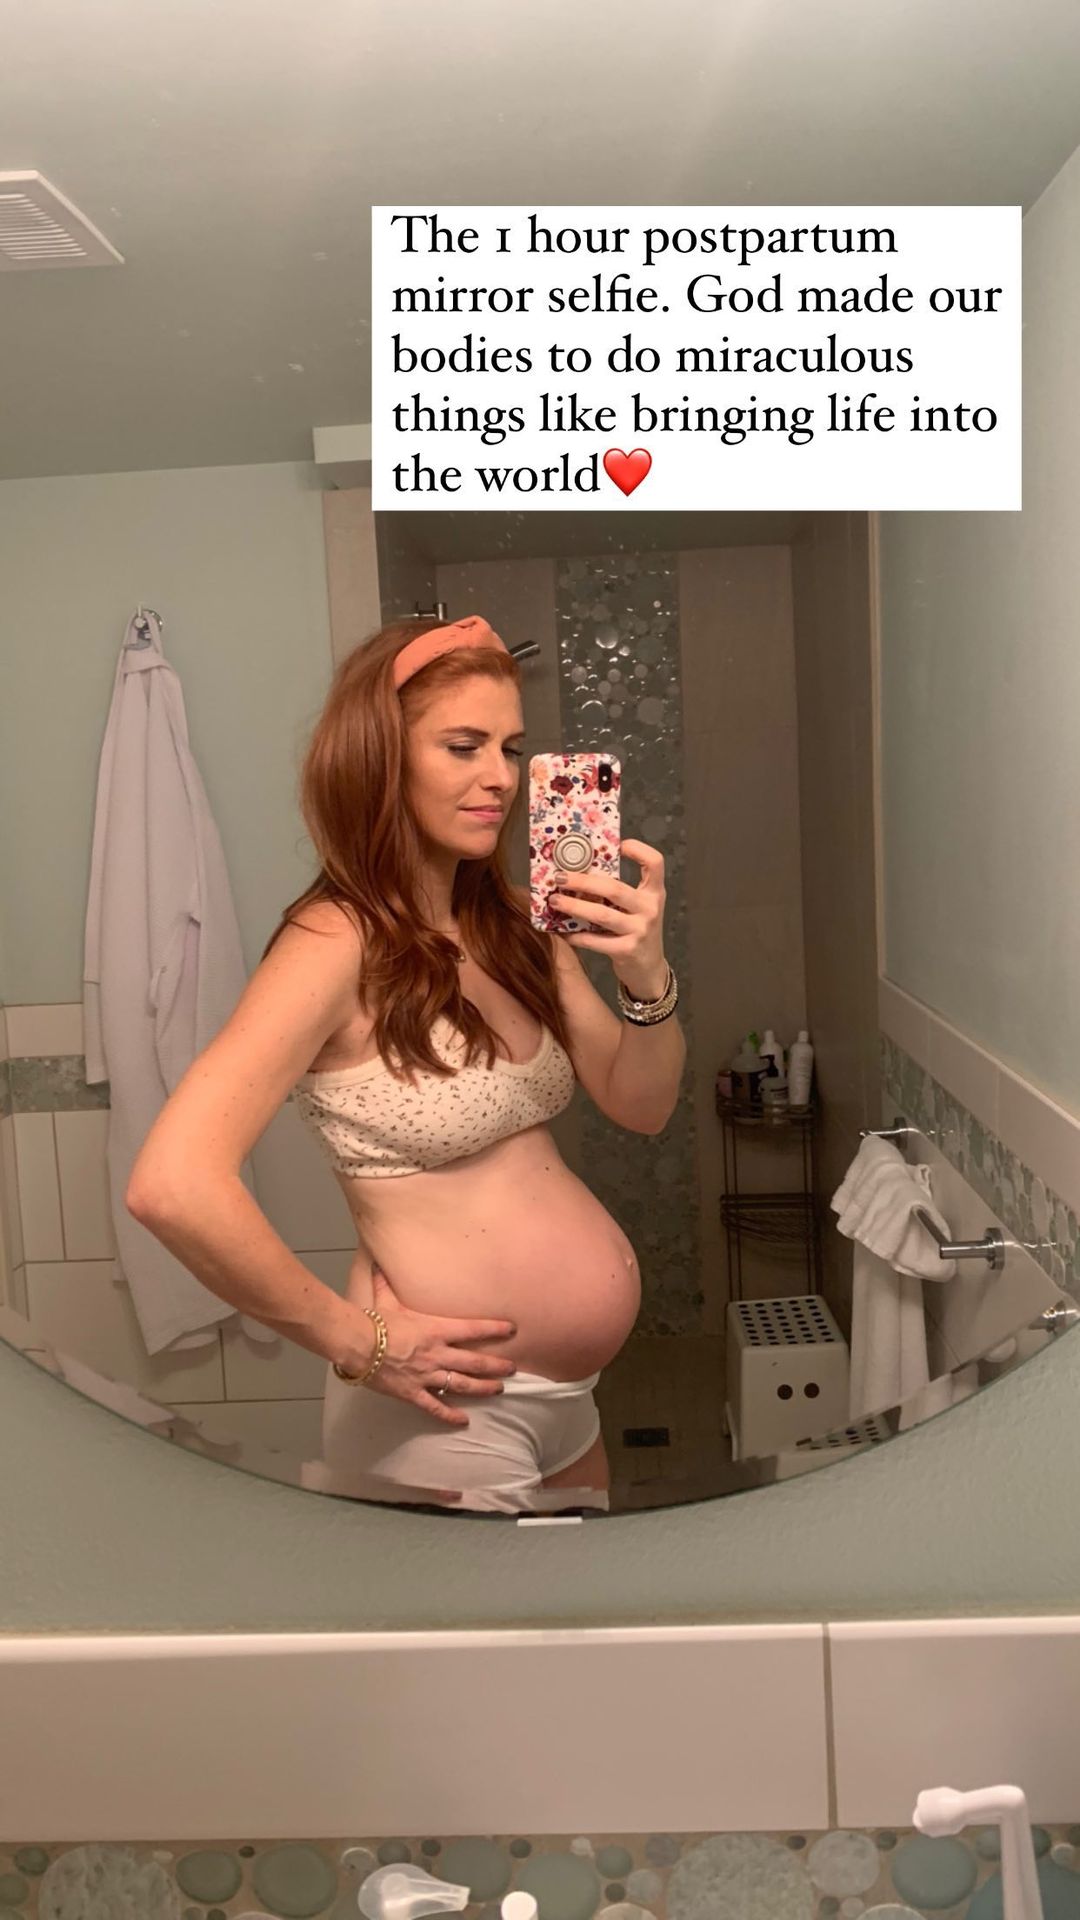 Celeb Moms Debut Postpartum Bodies Days After Giving Birth